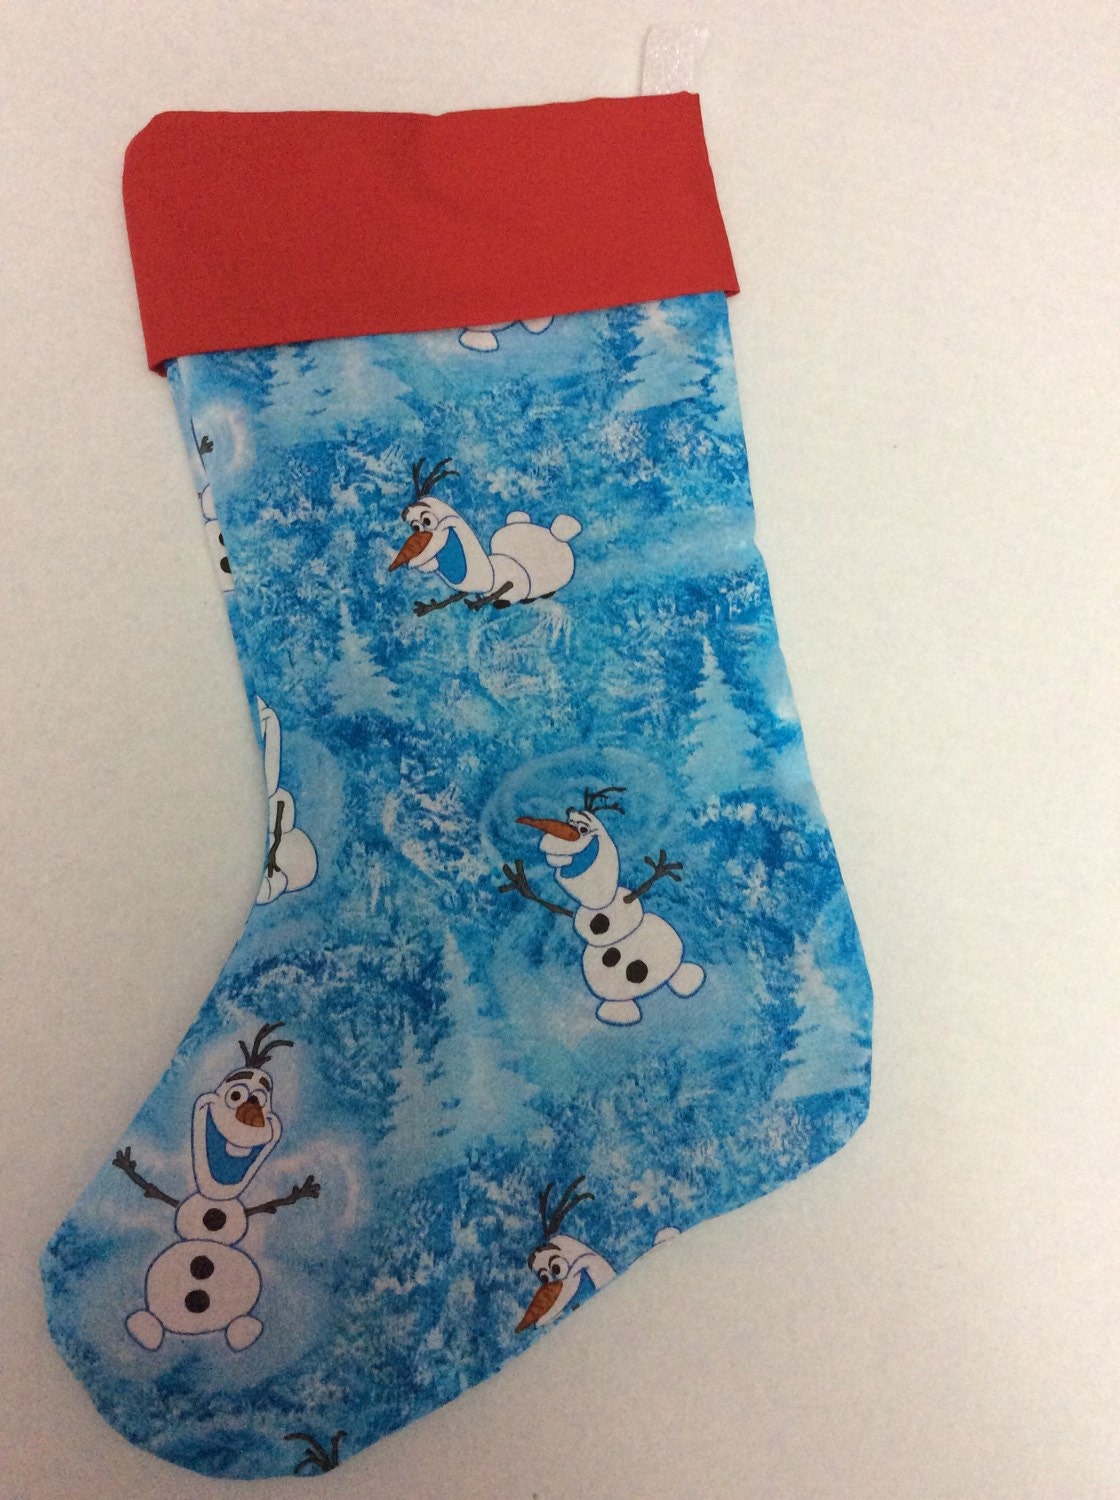 Handmade Christmas stocking - Olaf from Disney's Frozen